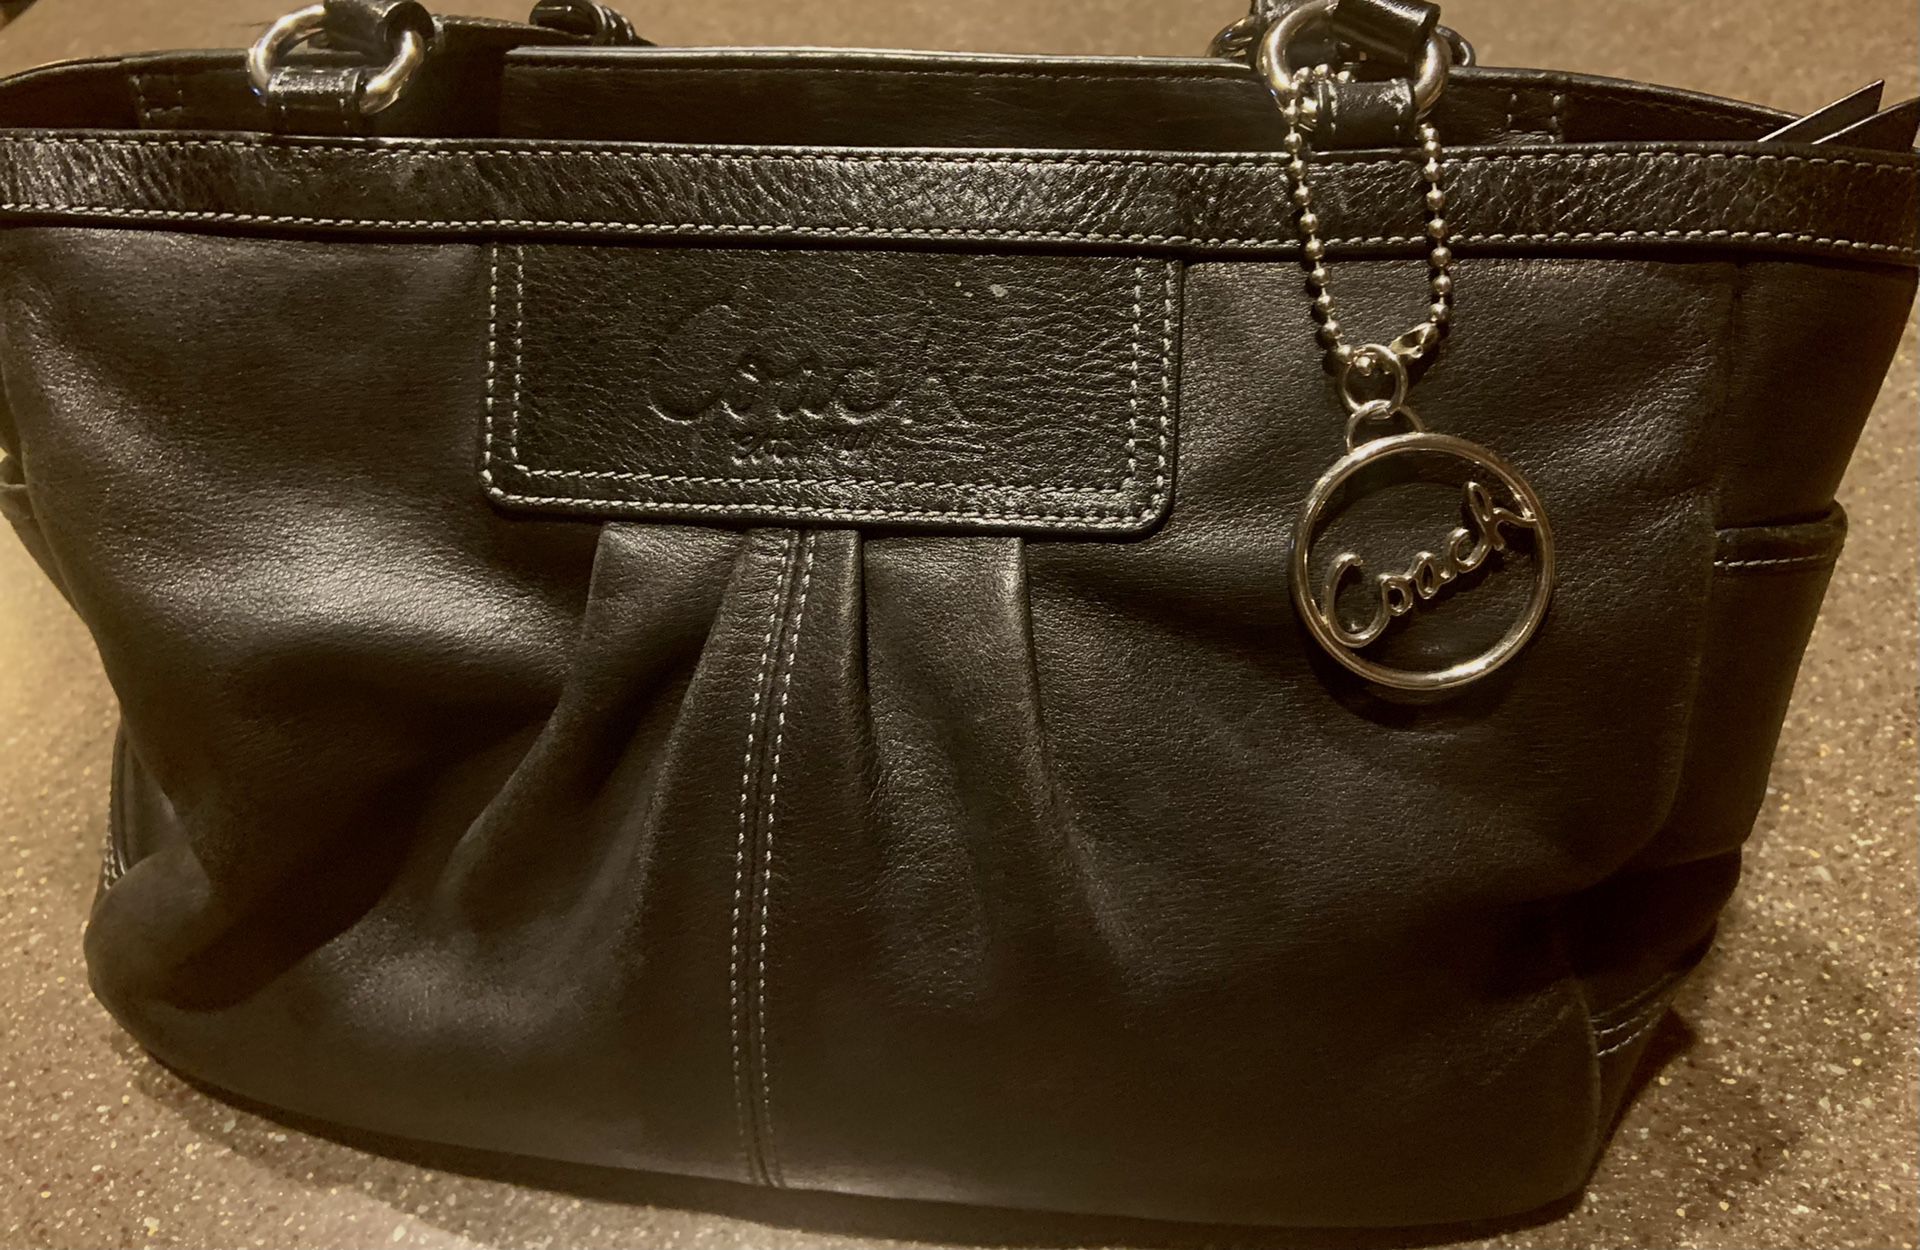 Coach Leather Handbag